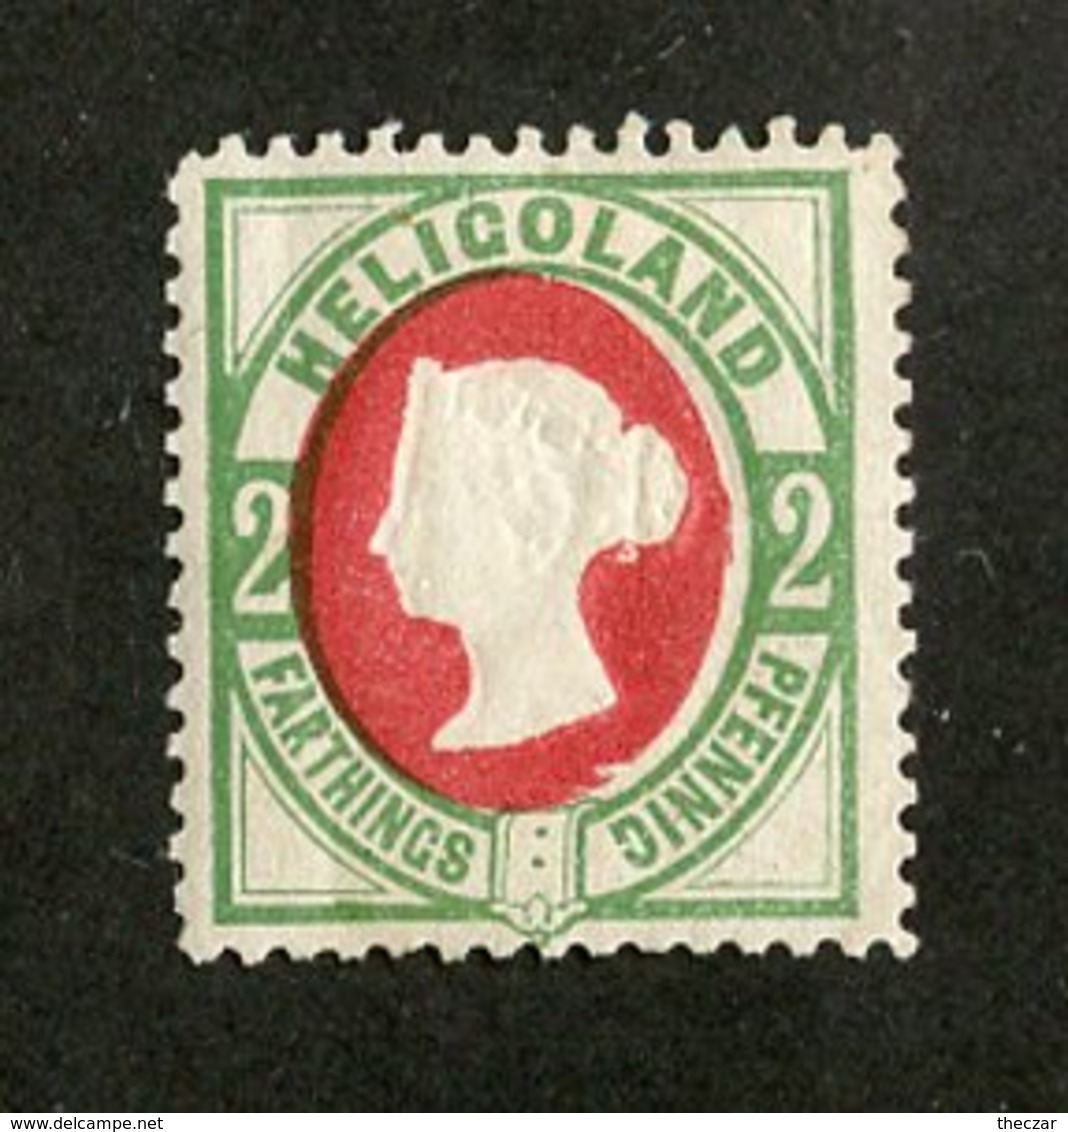 W-12721 Heligoland 1875 Mi.#12* Fake Or Reprint? Offers Welcome - Heligoland